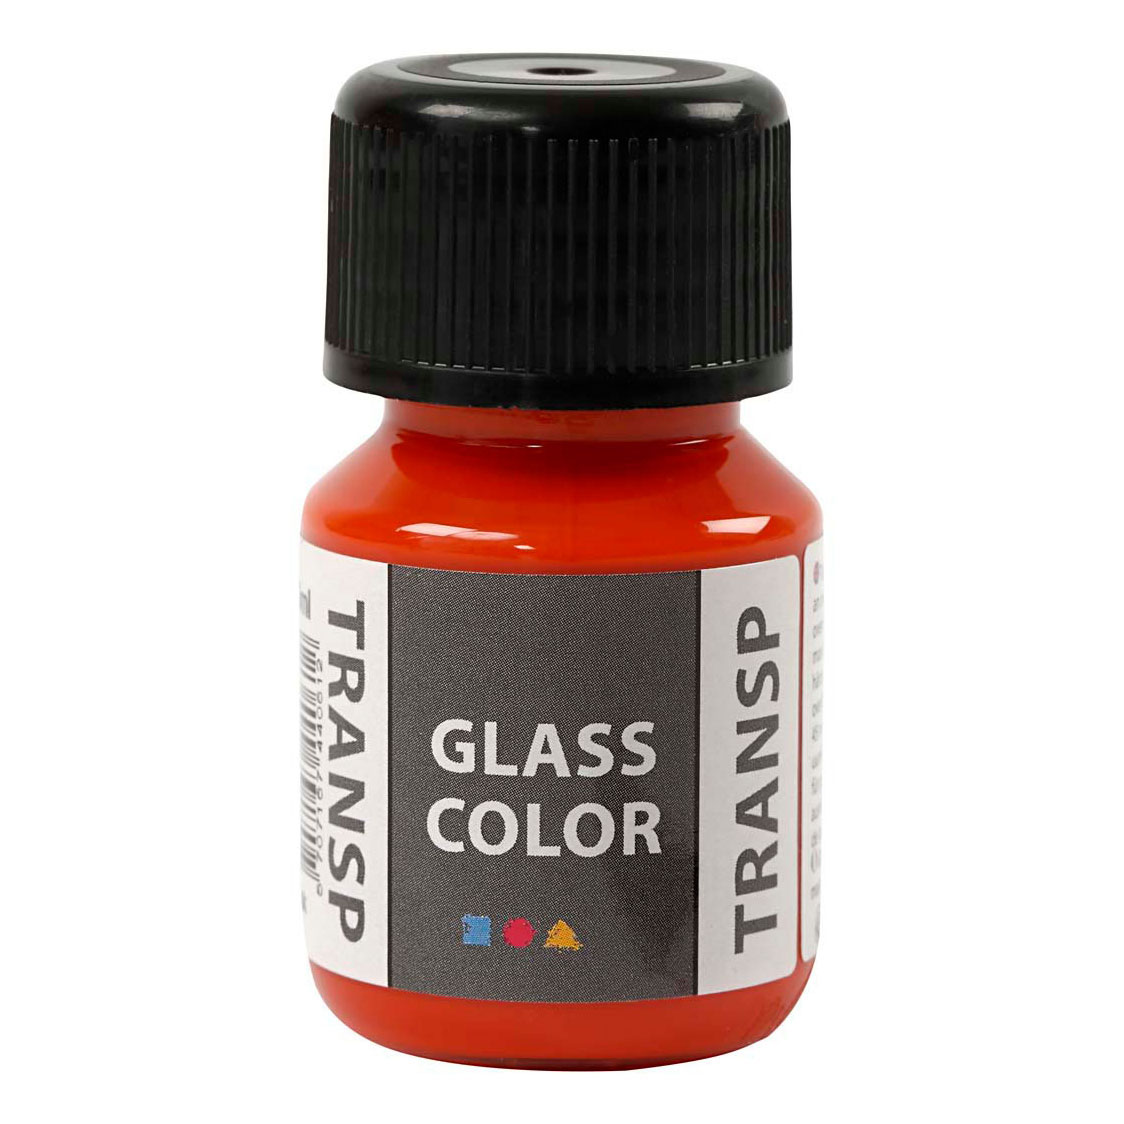 Glass Color Transparante Verf - Oranje, 30ml